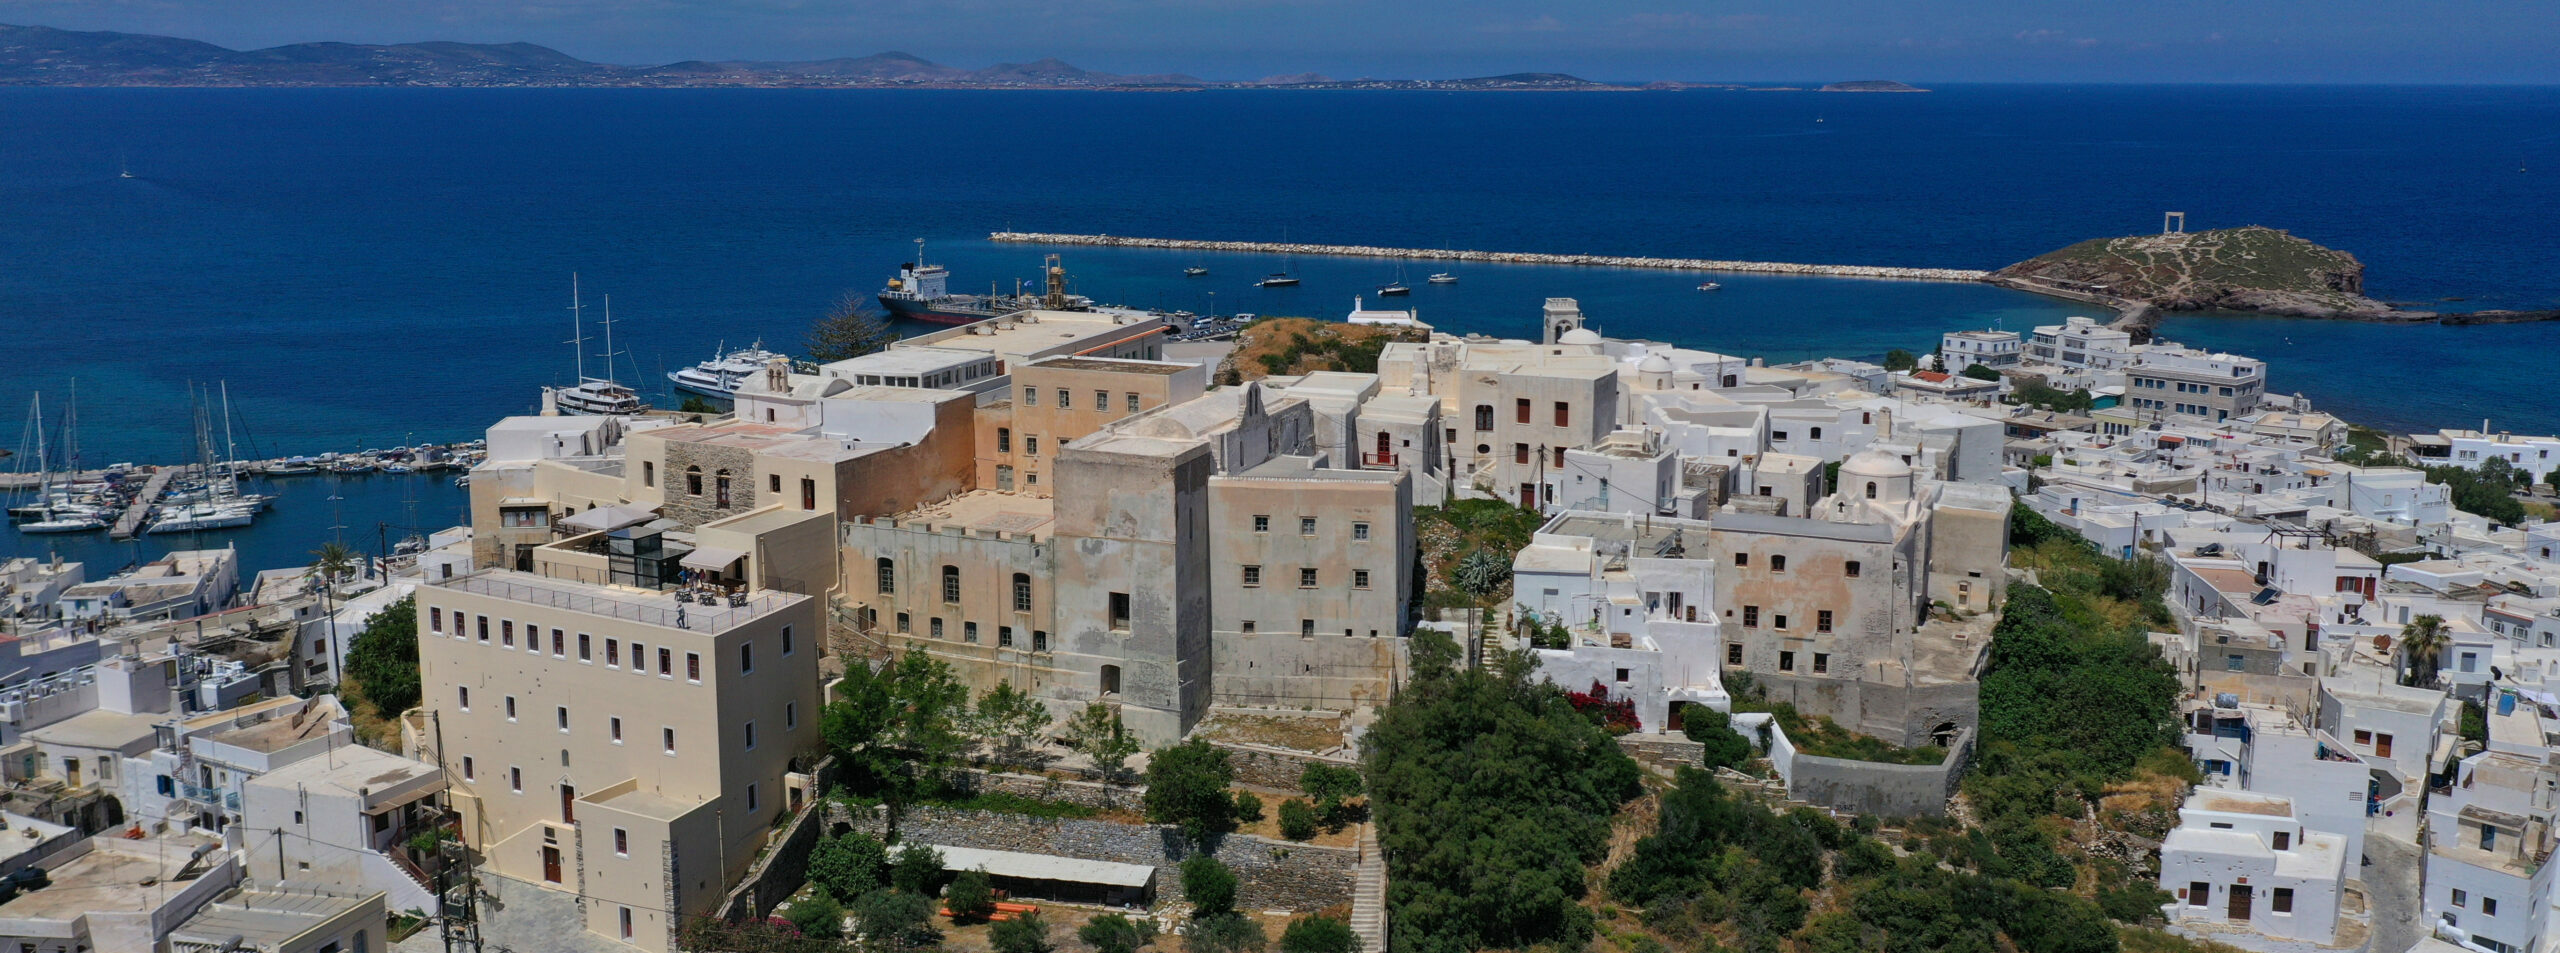 Naxos: The Venetian castle